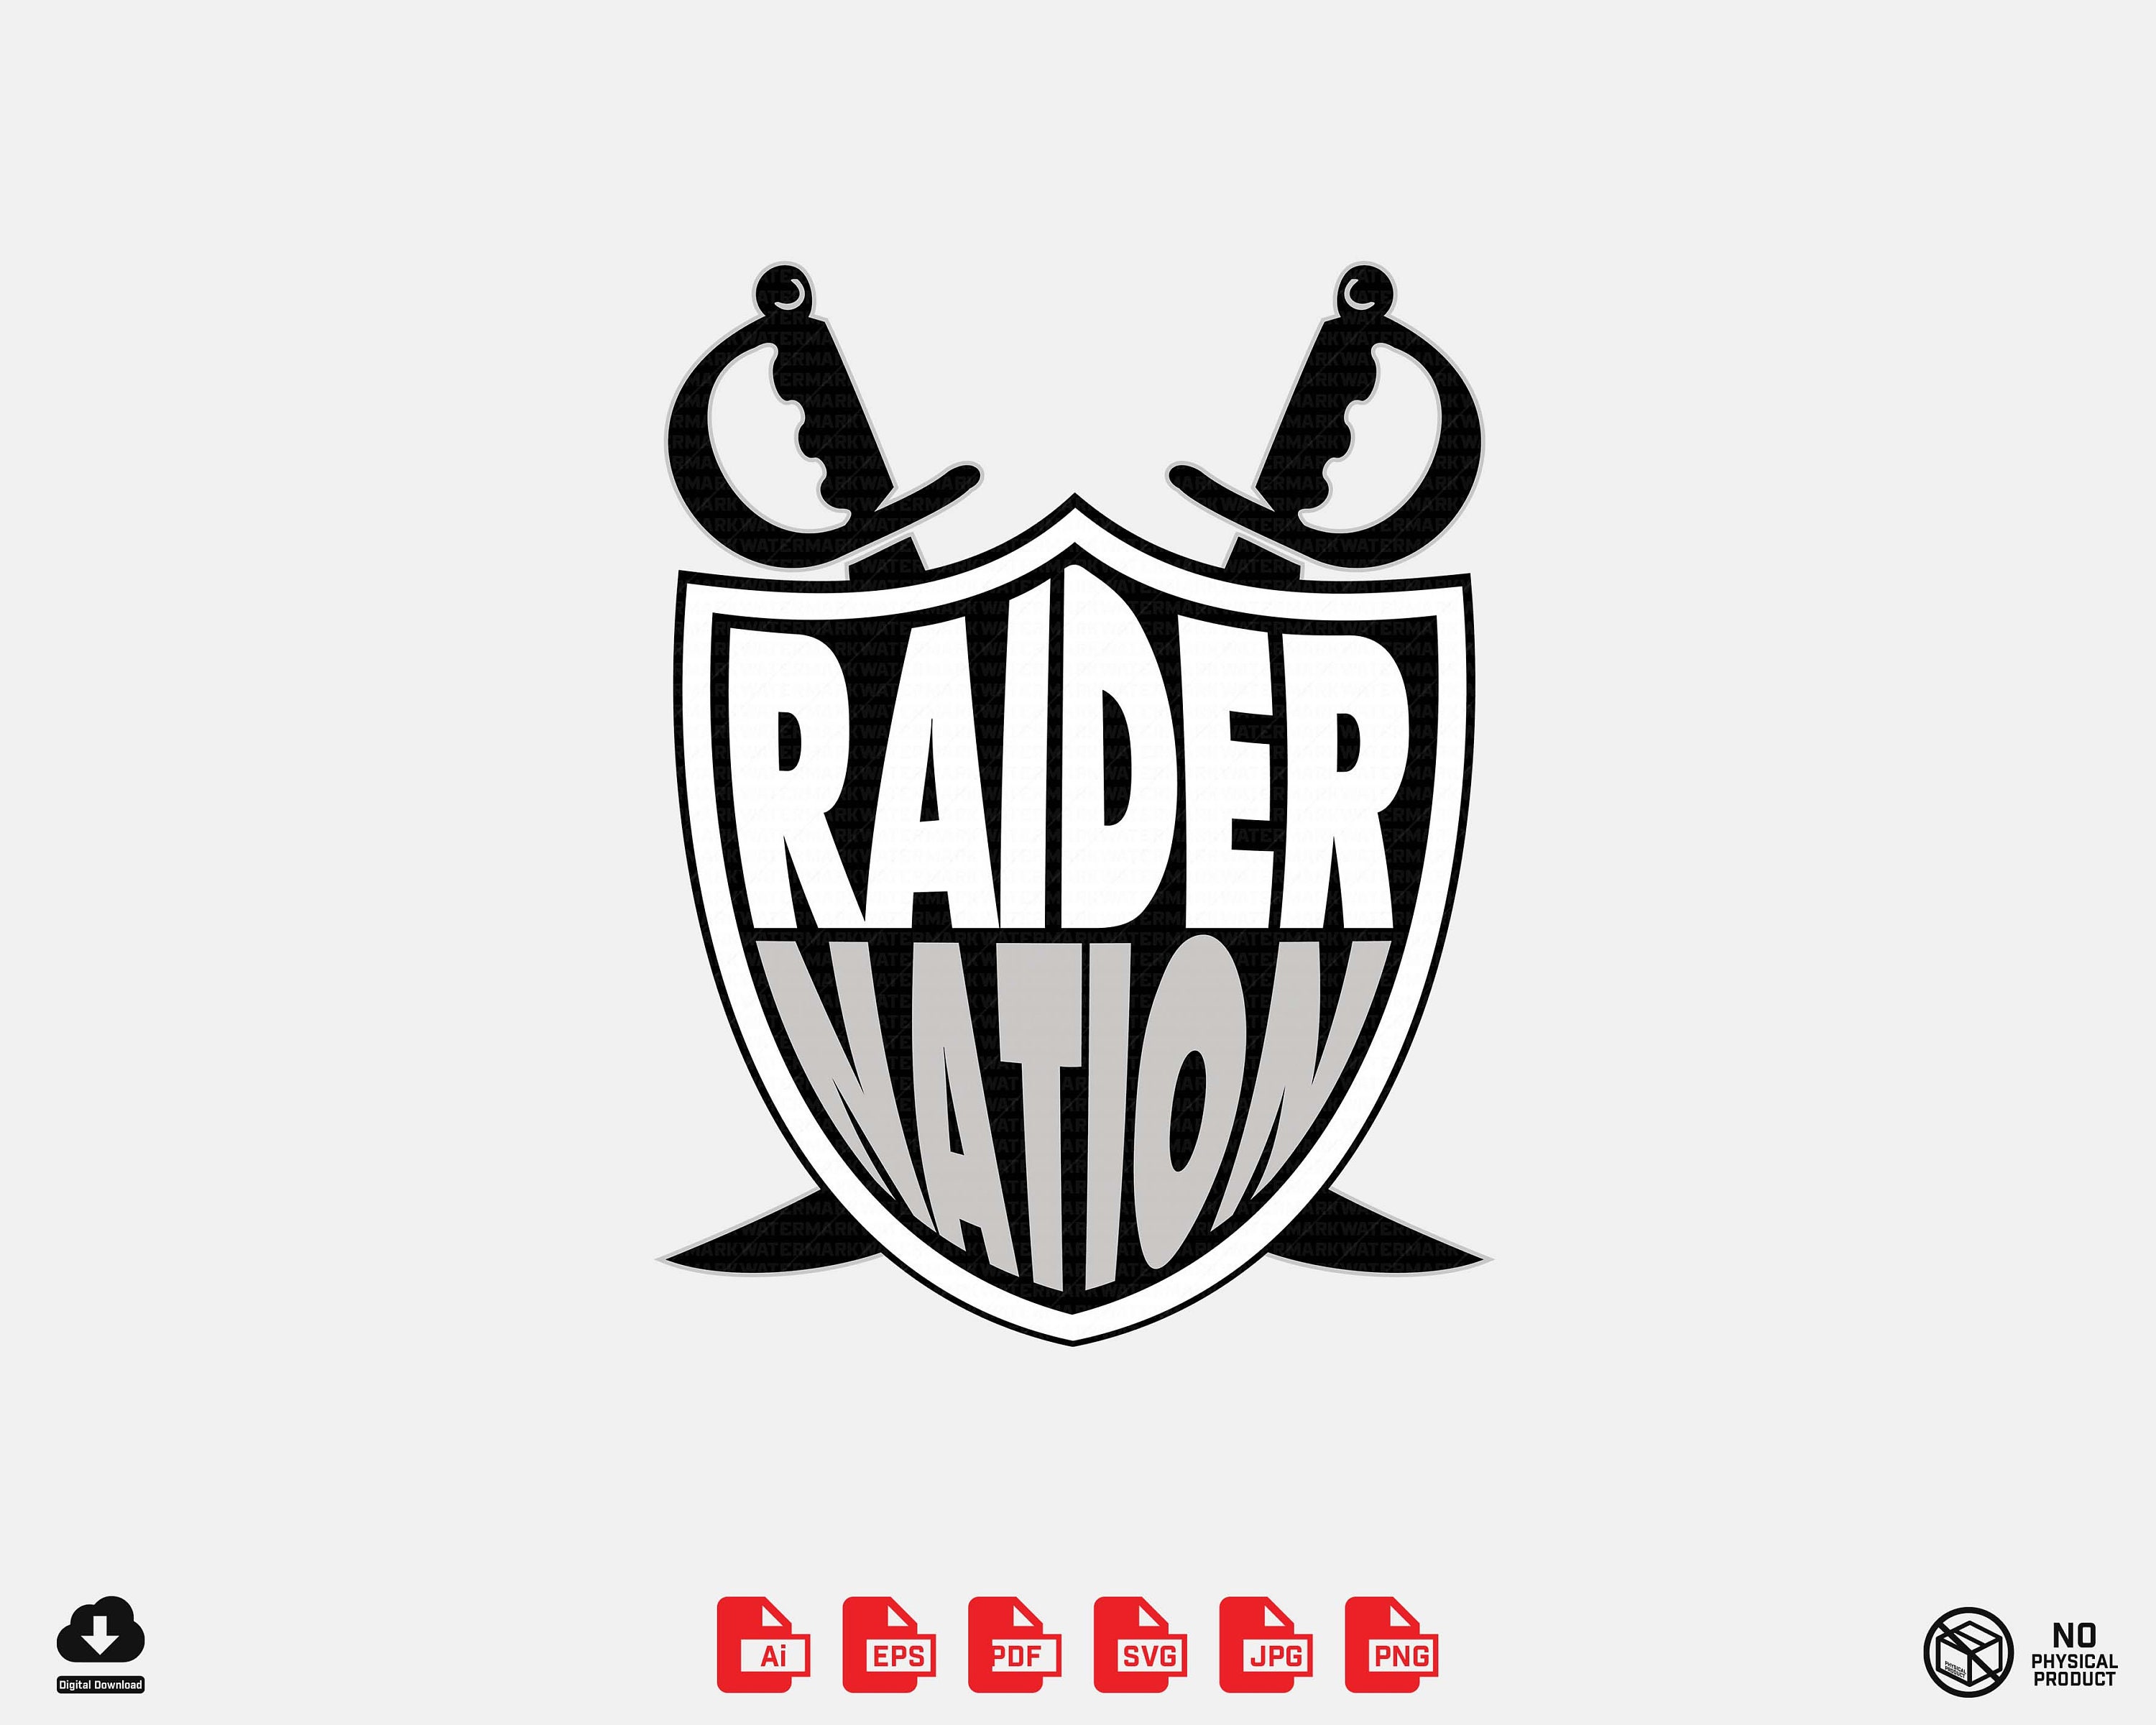 raider nation 1 Patch